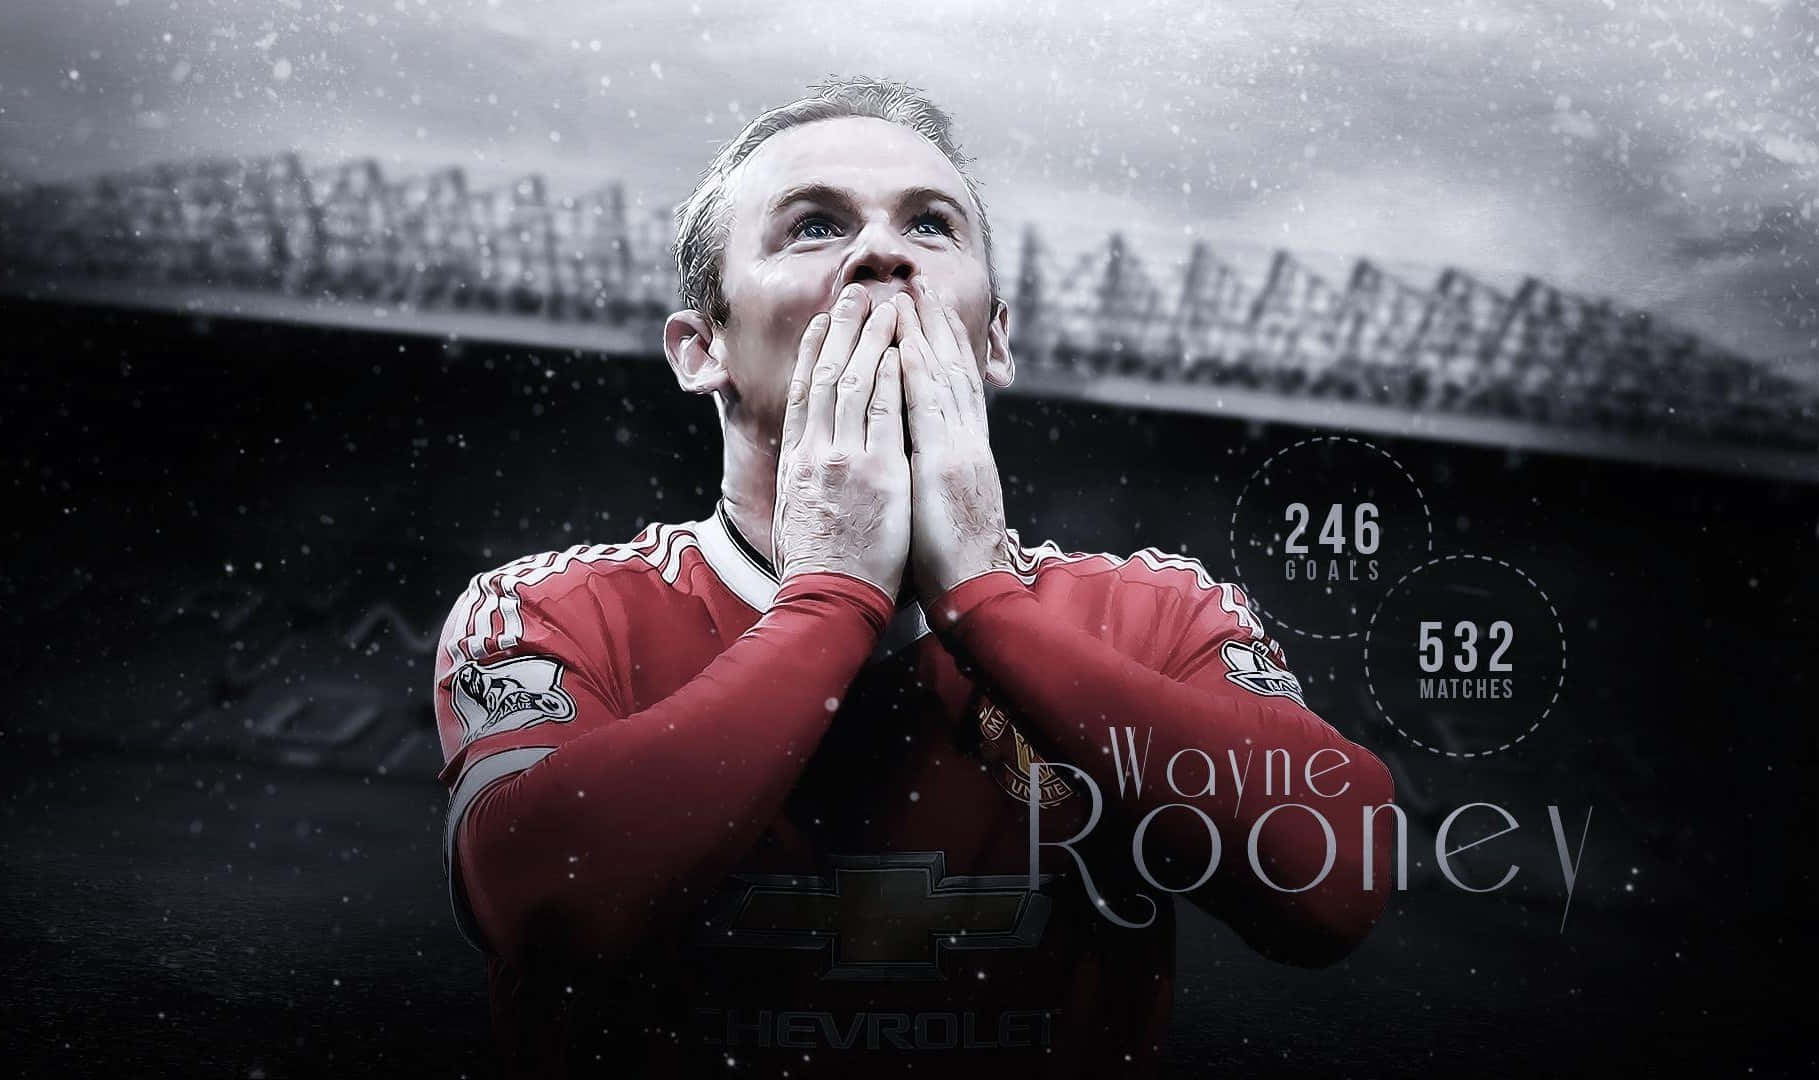 Wayne Rooney Football Scores Picture